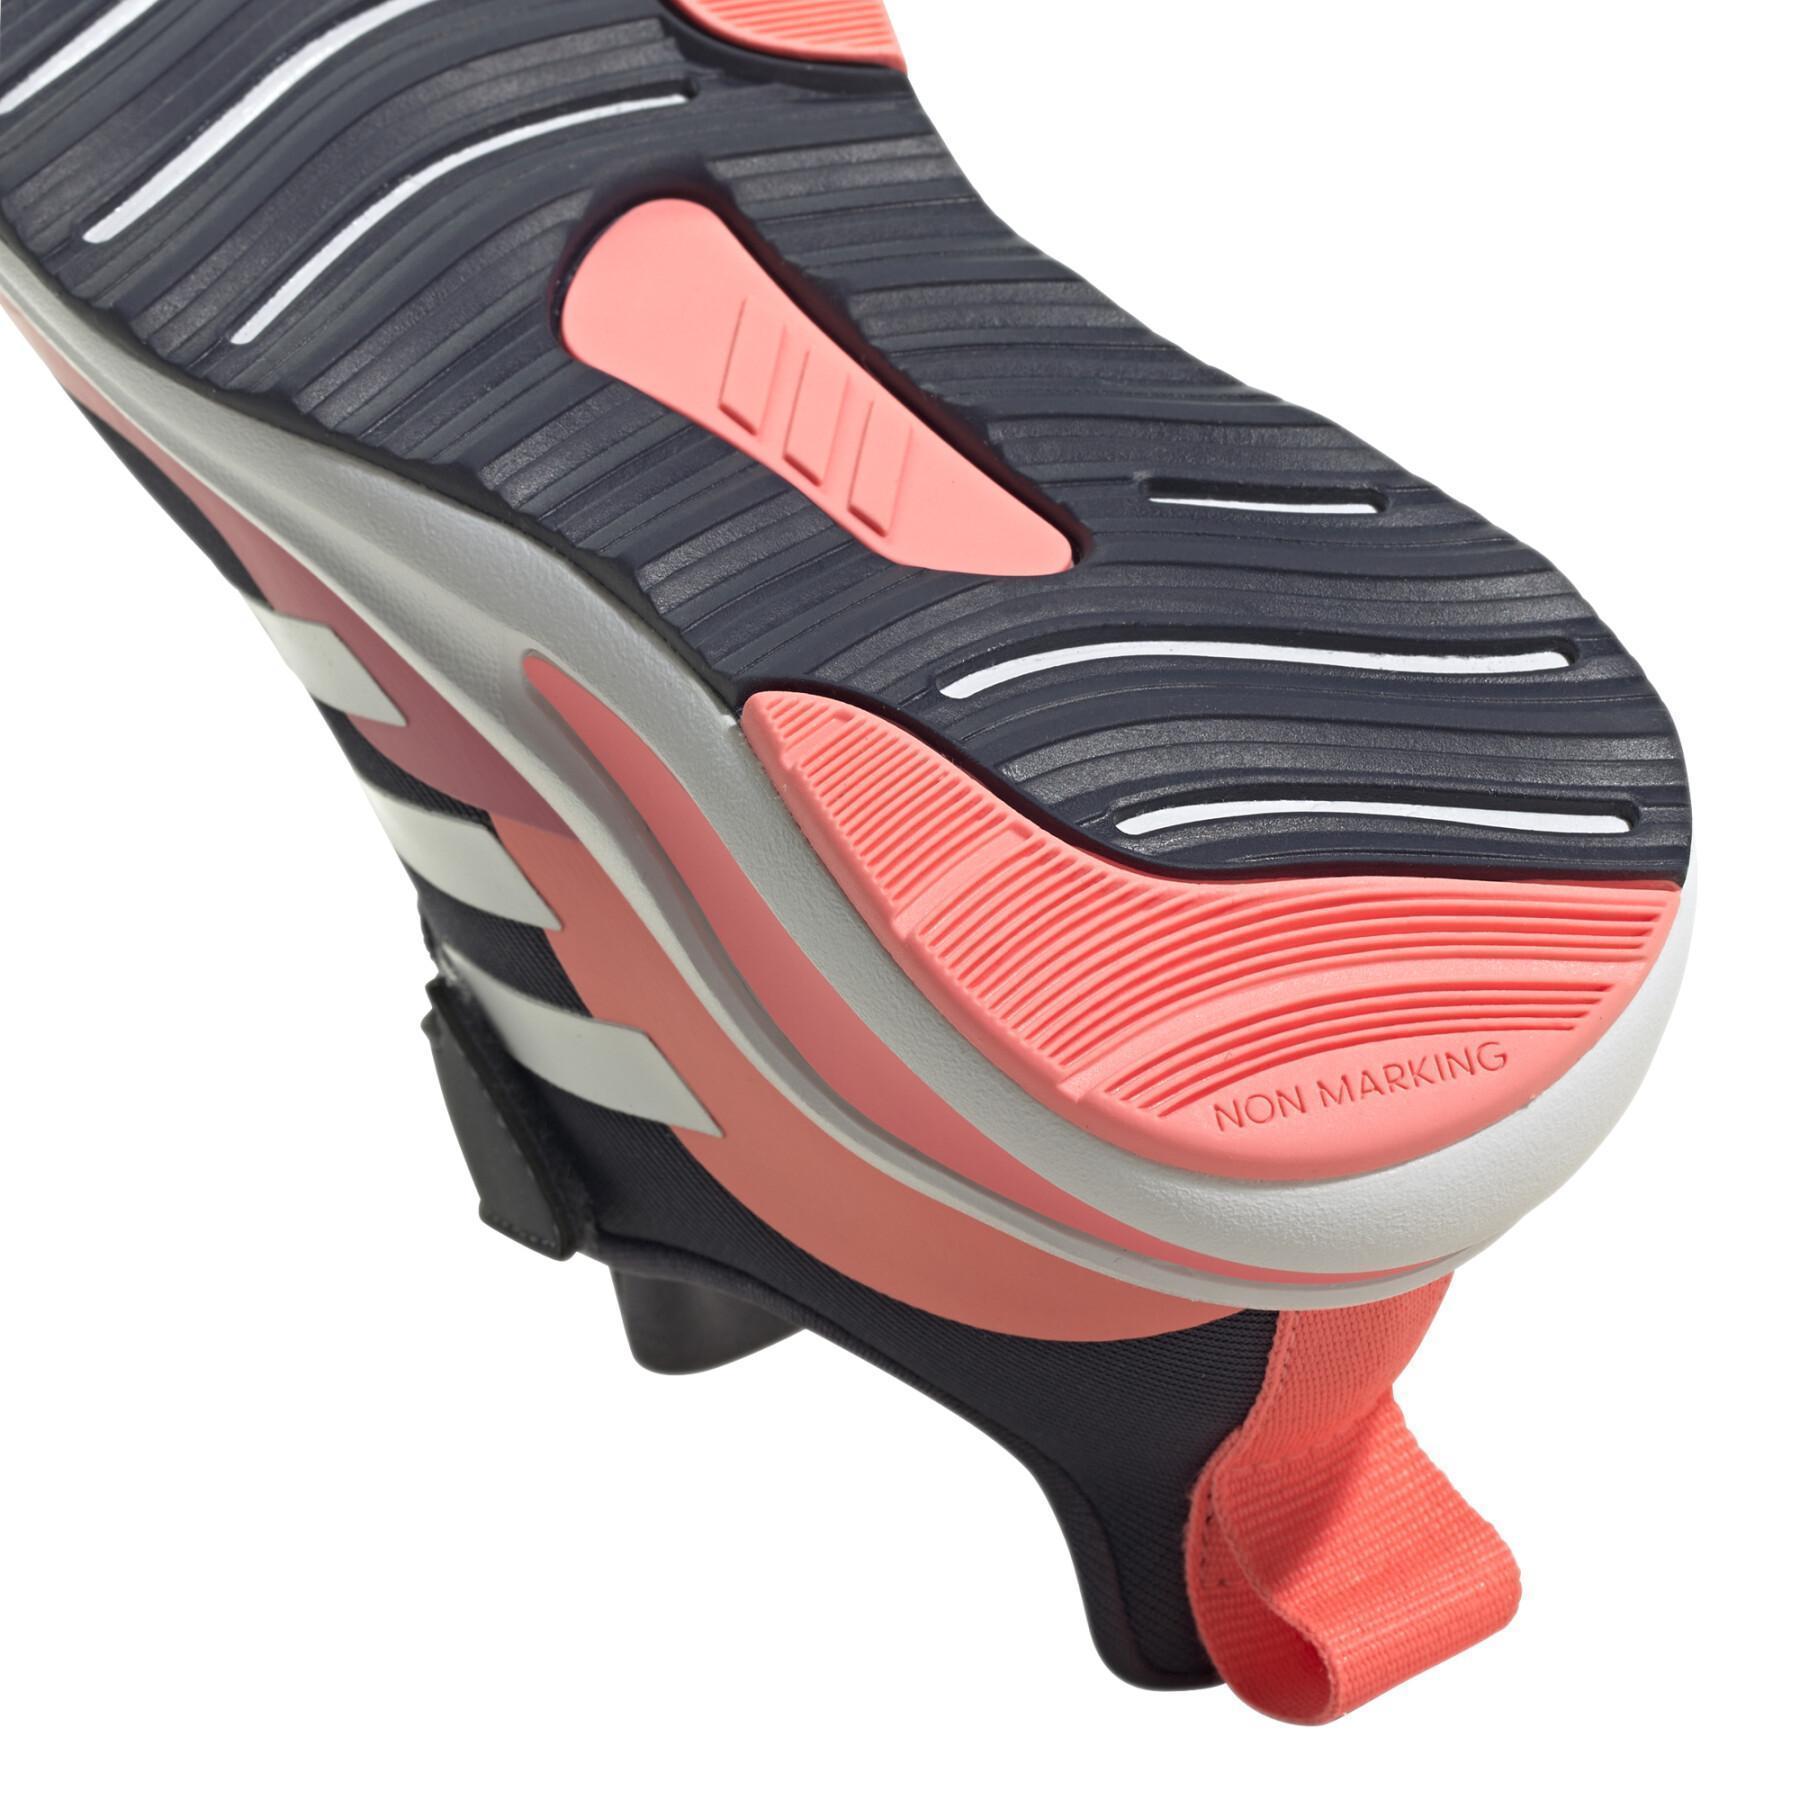 Chaussures de running enfant adidas Fortarun Elastic Lace Top Strap